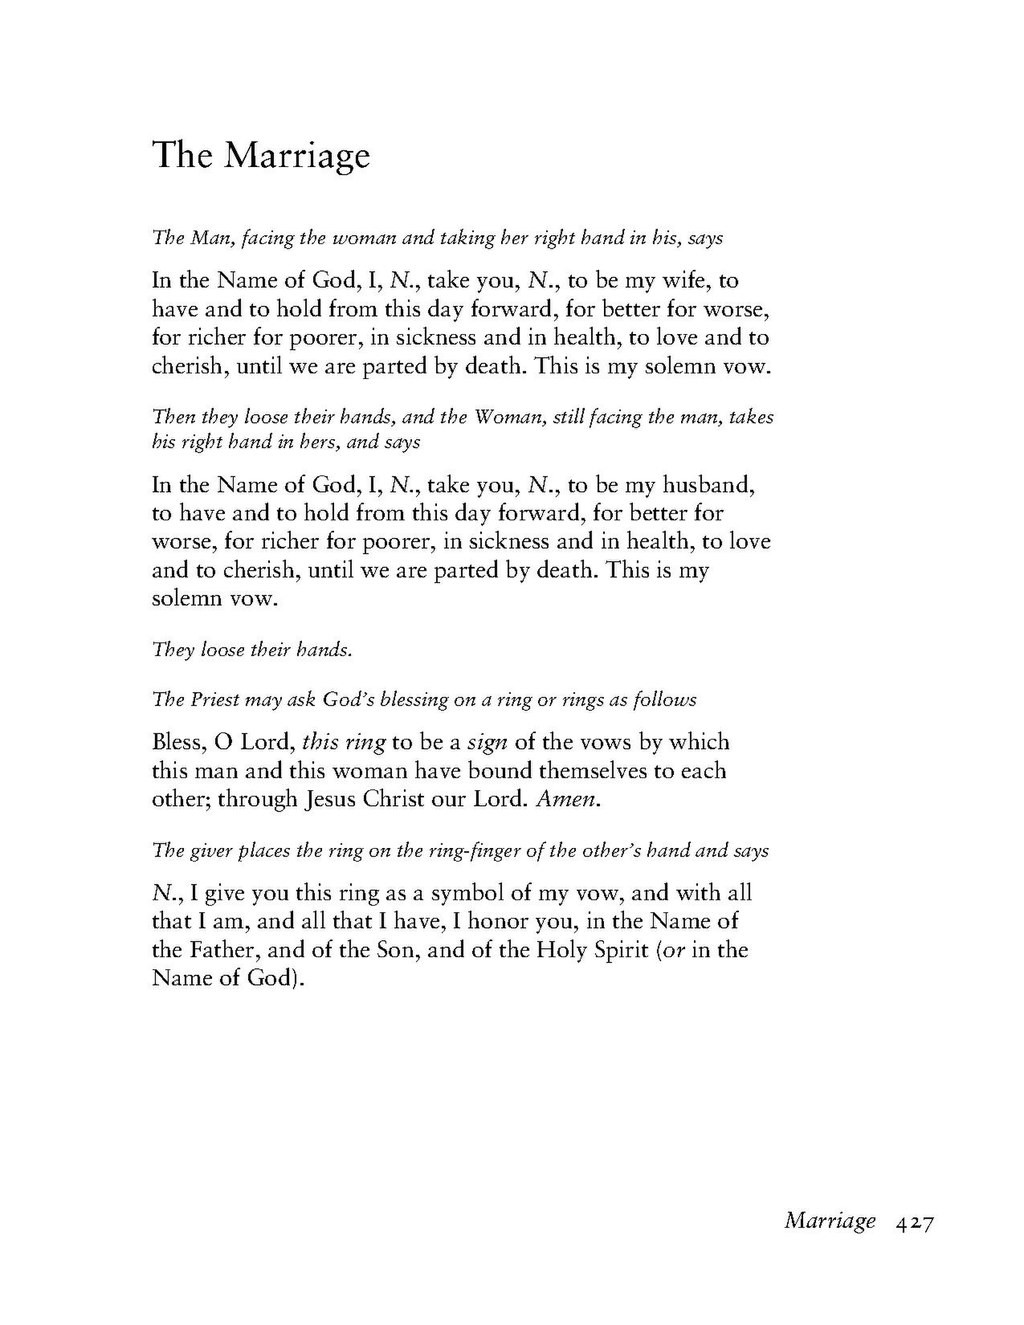 Book Of Common Prayer Wedding Vows
 Page Book of mon prayer TEC 1979 pdf 427